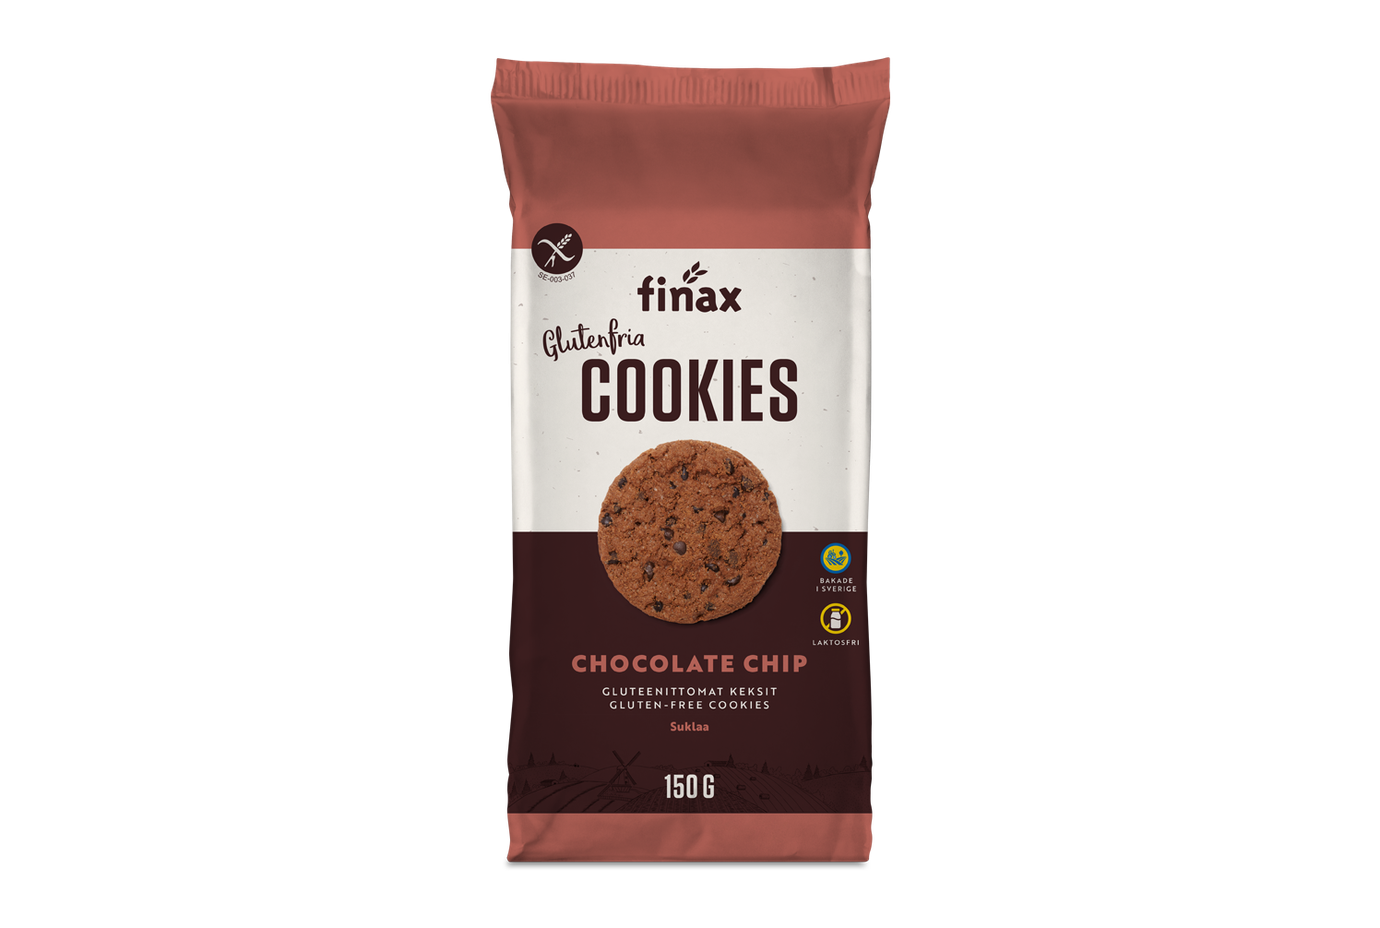 Finax Chocolate chip Cookies